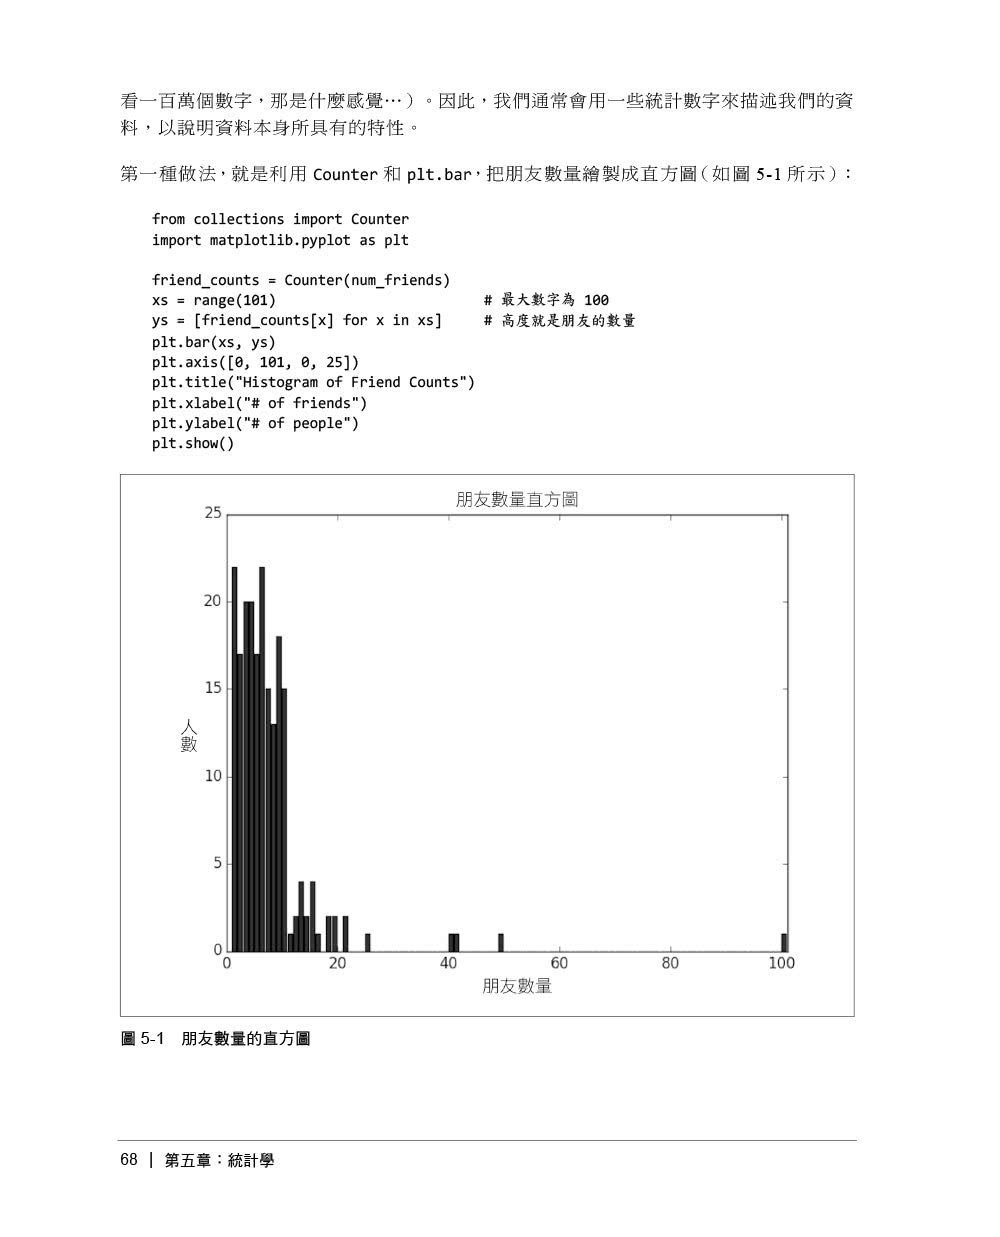 Data Science from Scratch中文版 第二版｜用Python學資料科學